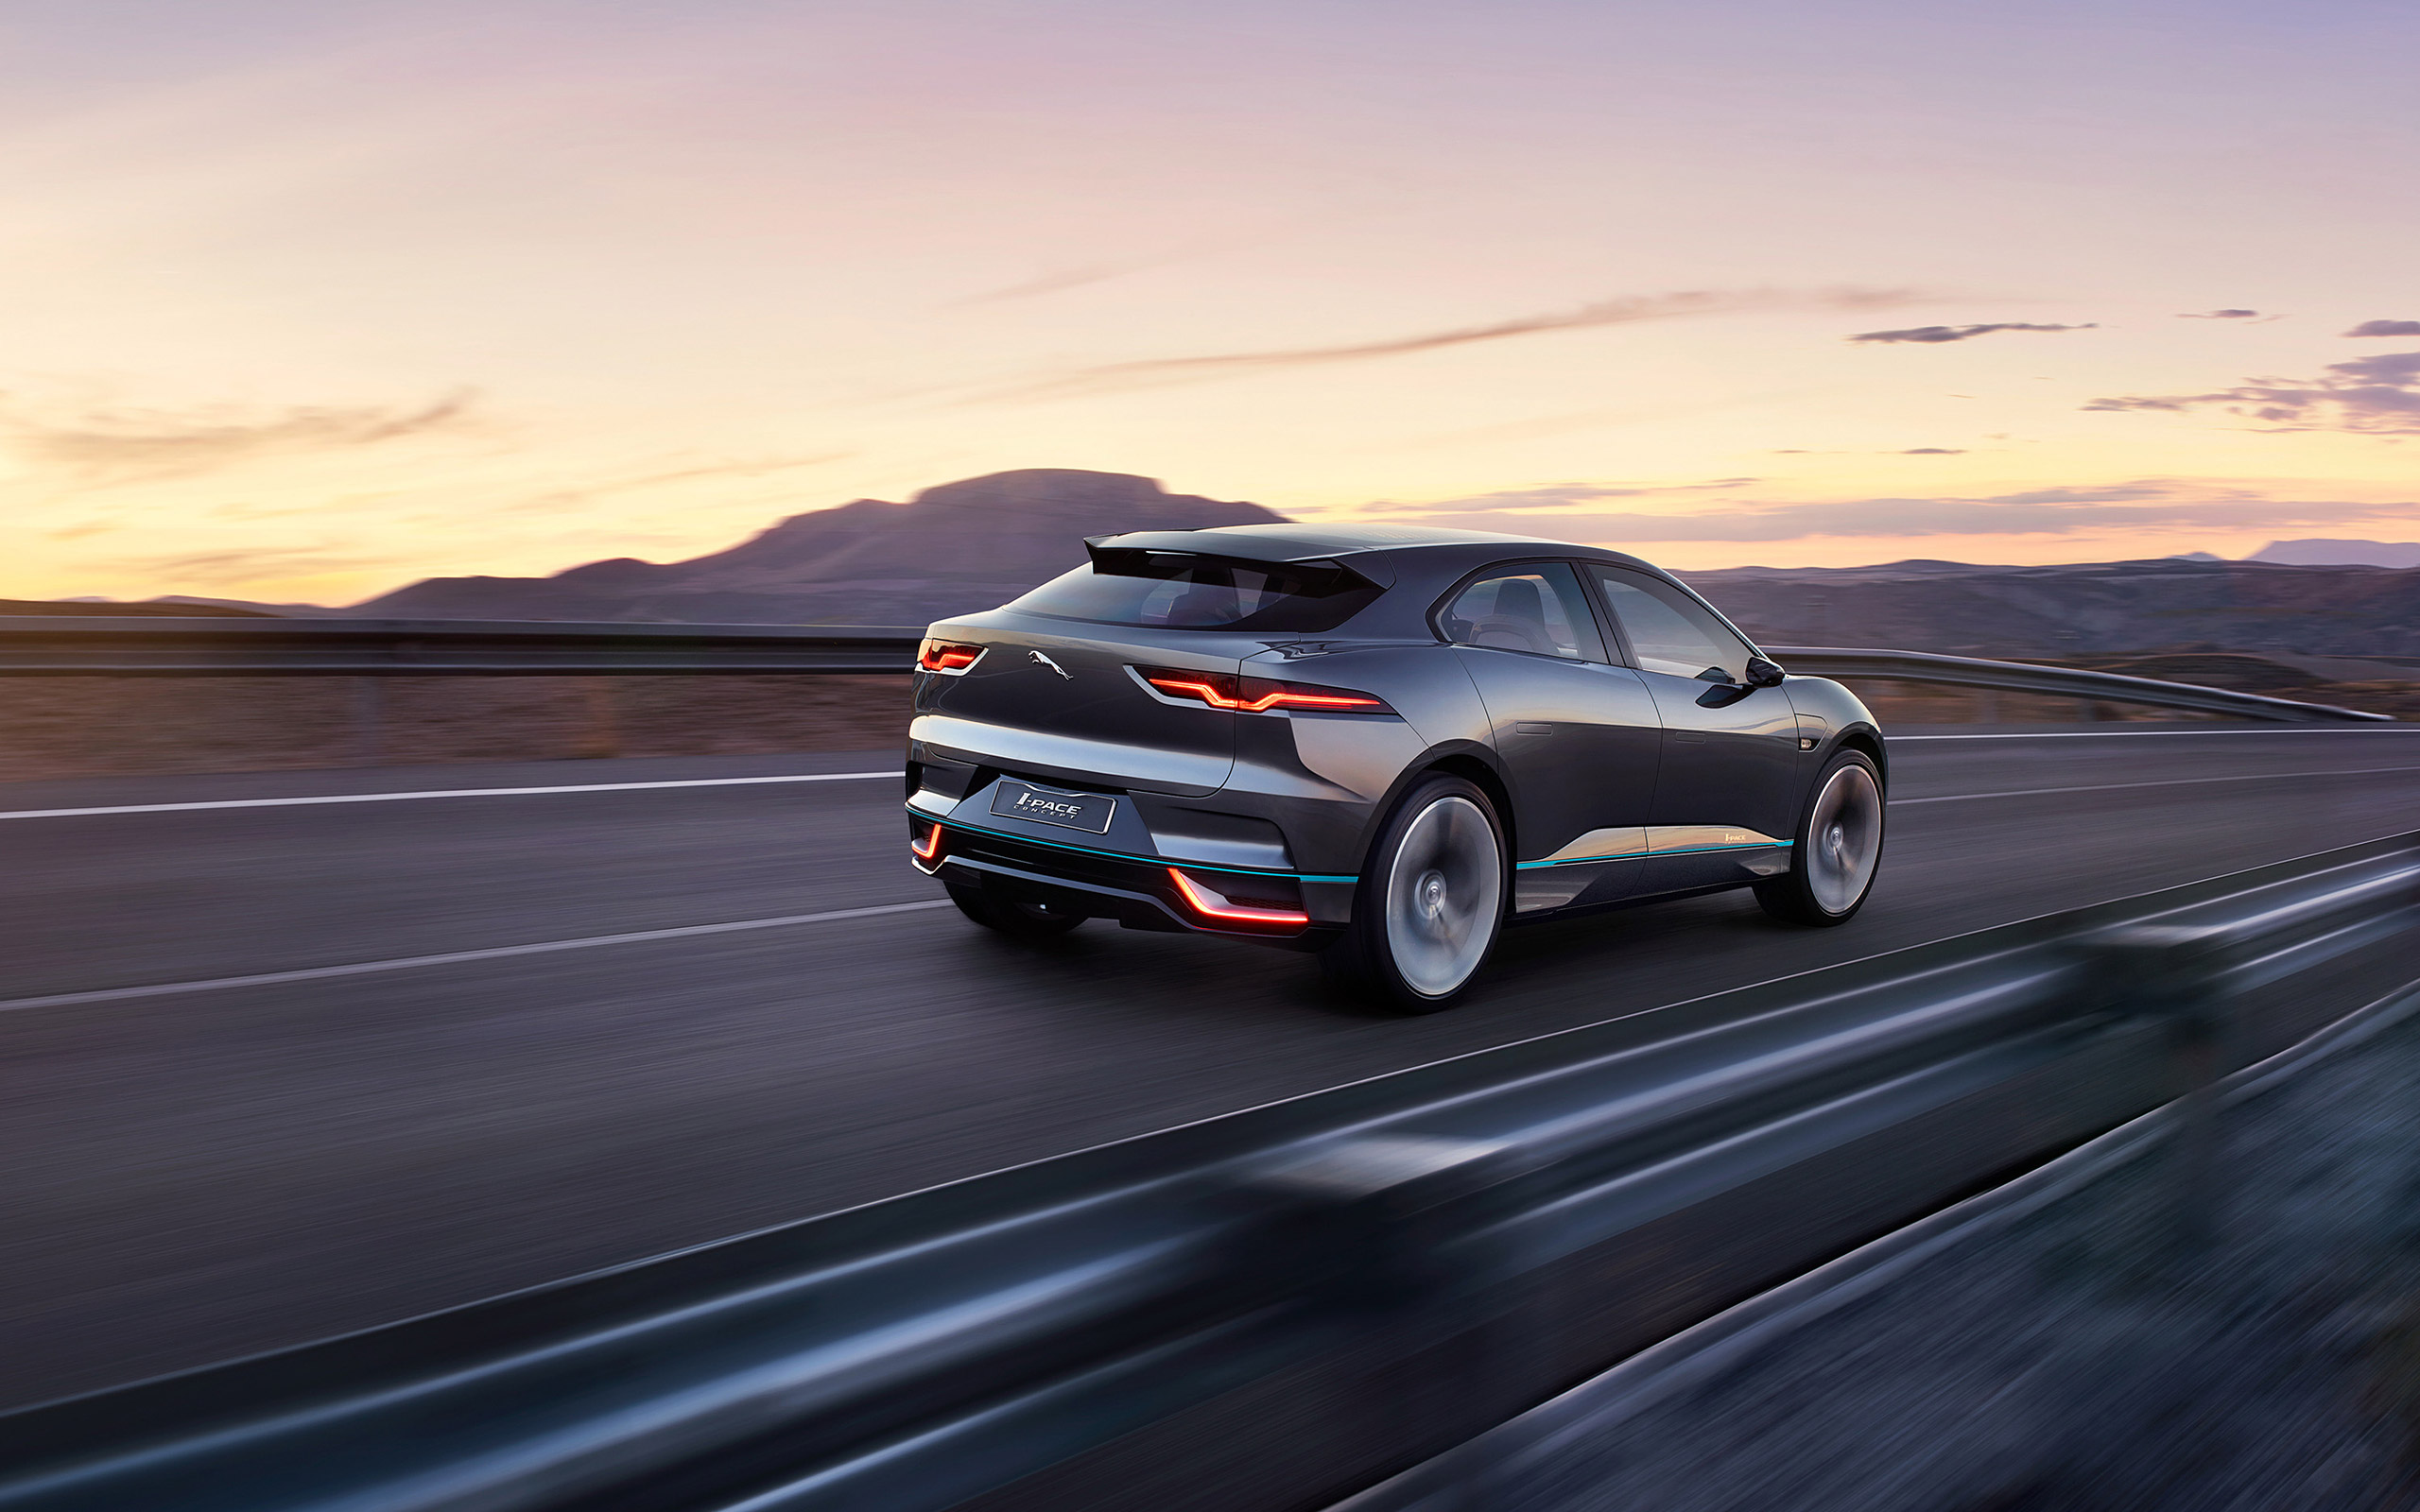  2016 Jaguar I-Pace Concept Wallpaper.